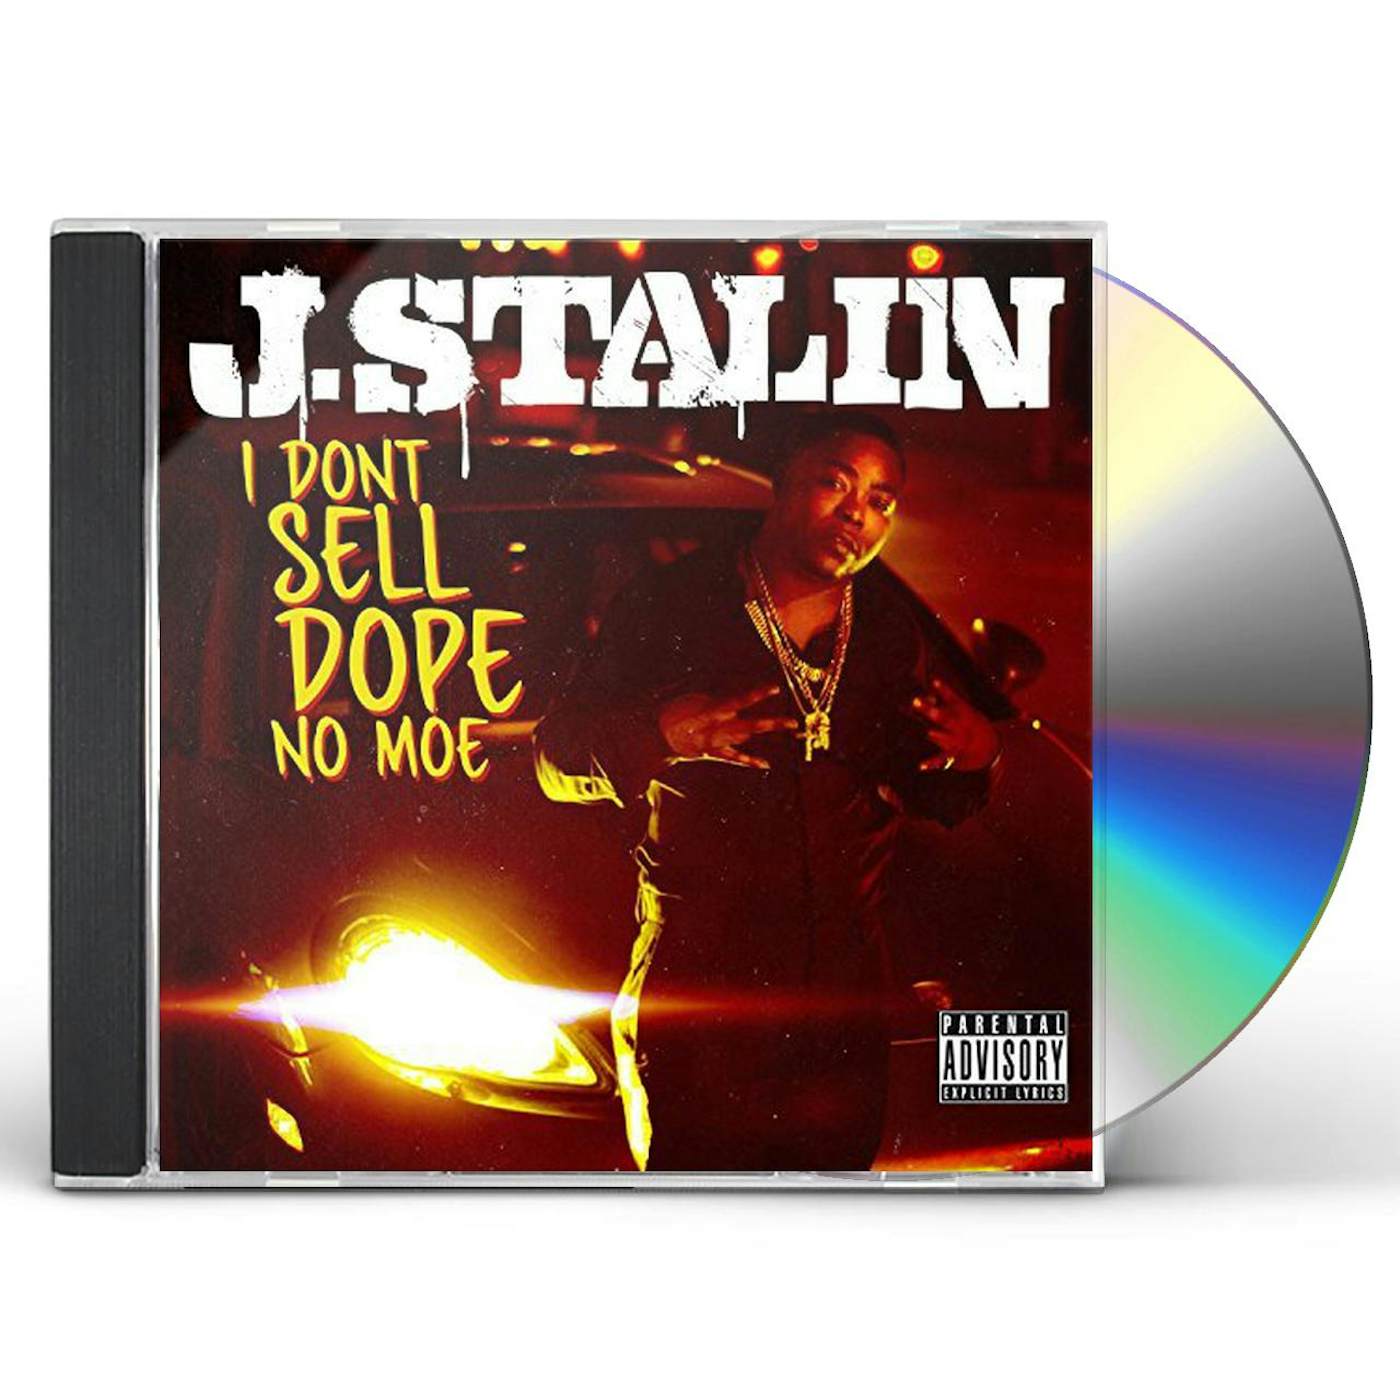 J. Stalin I DON'T SELL DOPE NO MOE CD